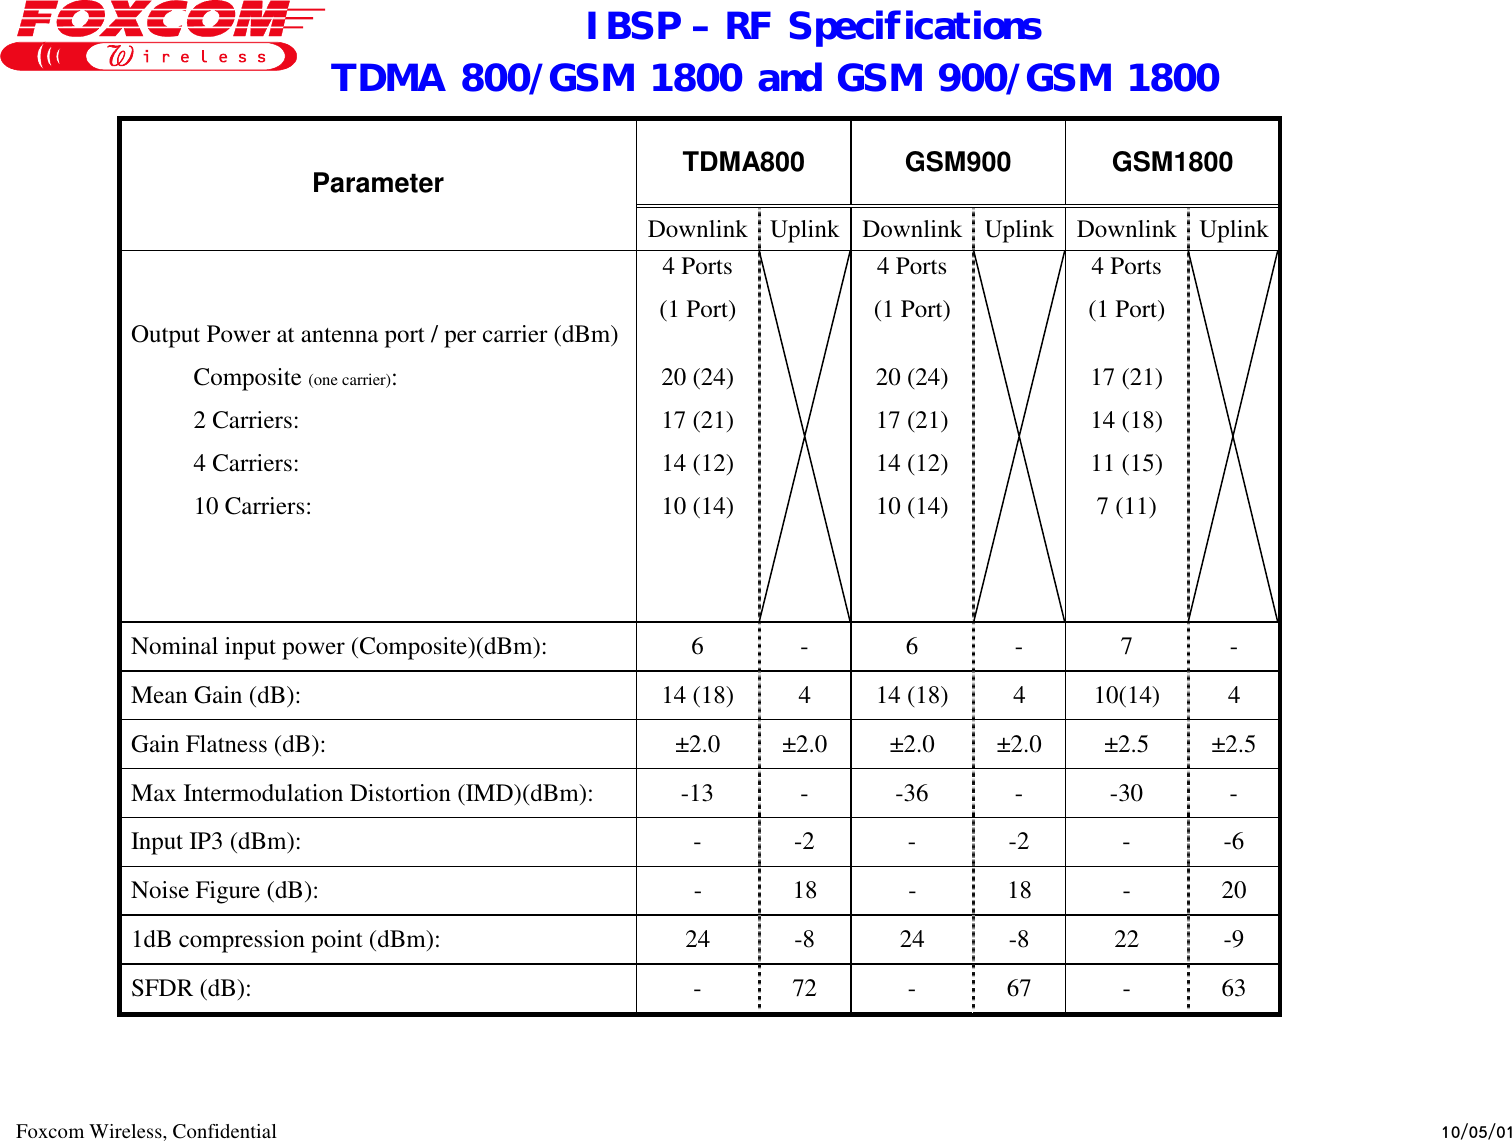 IBSP – RF Specifications TDMA 800/GSM 1800 and GSM 900/GSM 1800 Foxcom Wireless, Confidential             TDMA800   GSM900 GSM1800 Parameter Downlink Uplink Downlink Uplink Downlink UplinkOutput Power at antenna port / per carrier (dBm)           Composite (one carrier):           2 Carriers:           4 Carriers:           10 Carriers:  4 Ports (1 Port) 20 (24) 17 (21) 14 (12) 10 (14)    4 Ports (1 Port) 20 (24) 17 (21) 14 (12) 10 (14)    4 Ports (1 Port) 17 (21) 14 (18) 11 (15) 7 (11)    Nominal input power (Composite)(dBm):  6  -  6  -  7  - Mean Gain (dB):  14 (18)  4  14 (18)  4  10(14)  4 Gain Flatness (dB):  ±2.0 ±2.0 ±2.0 ±2.0 ±2.5 ±2.5 Max Intermodulation Distortion (IMD)(dBm):  -13  -  -36  -  -30  - Input IP3 (dBm):  -  -2  -  -2  -  -6 Noise Figure (dB):  - 18 - 18 - 20 1dB compression point (dBm):  24  -8  24  -8  22  -9 SFDR (dB):  - 72 - 67 - 63  